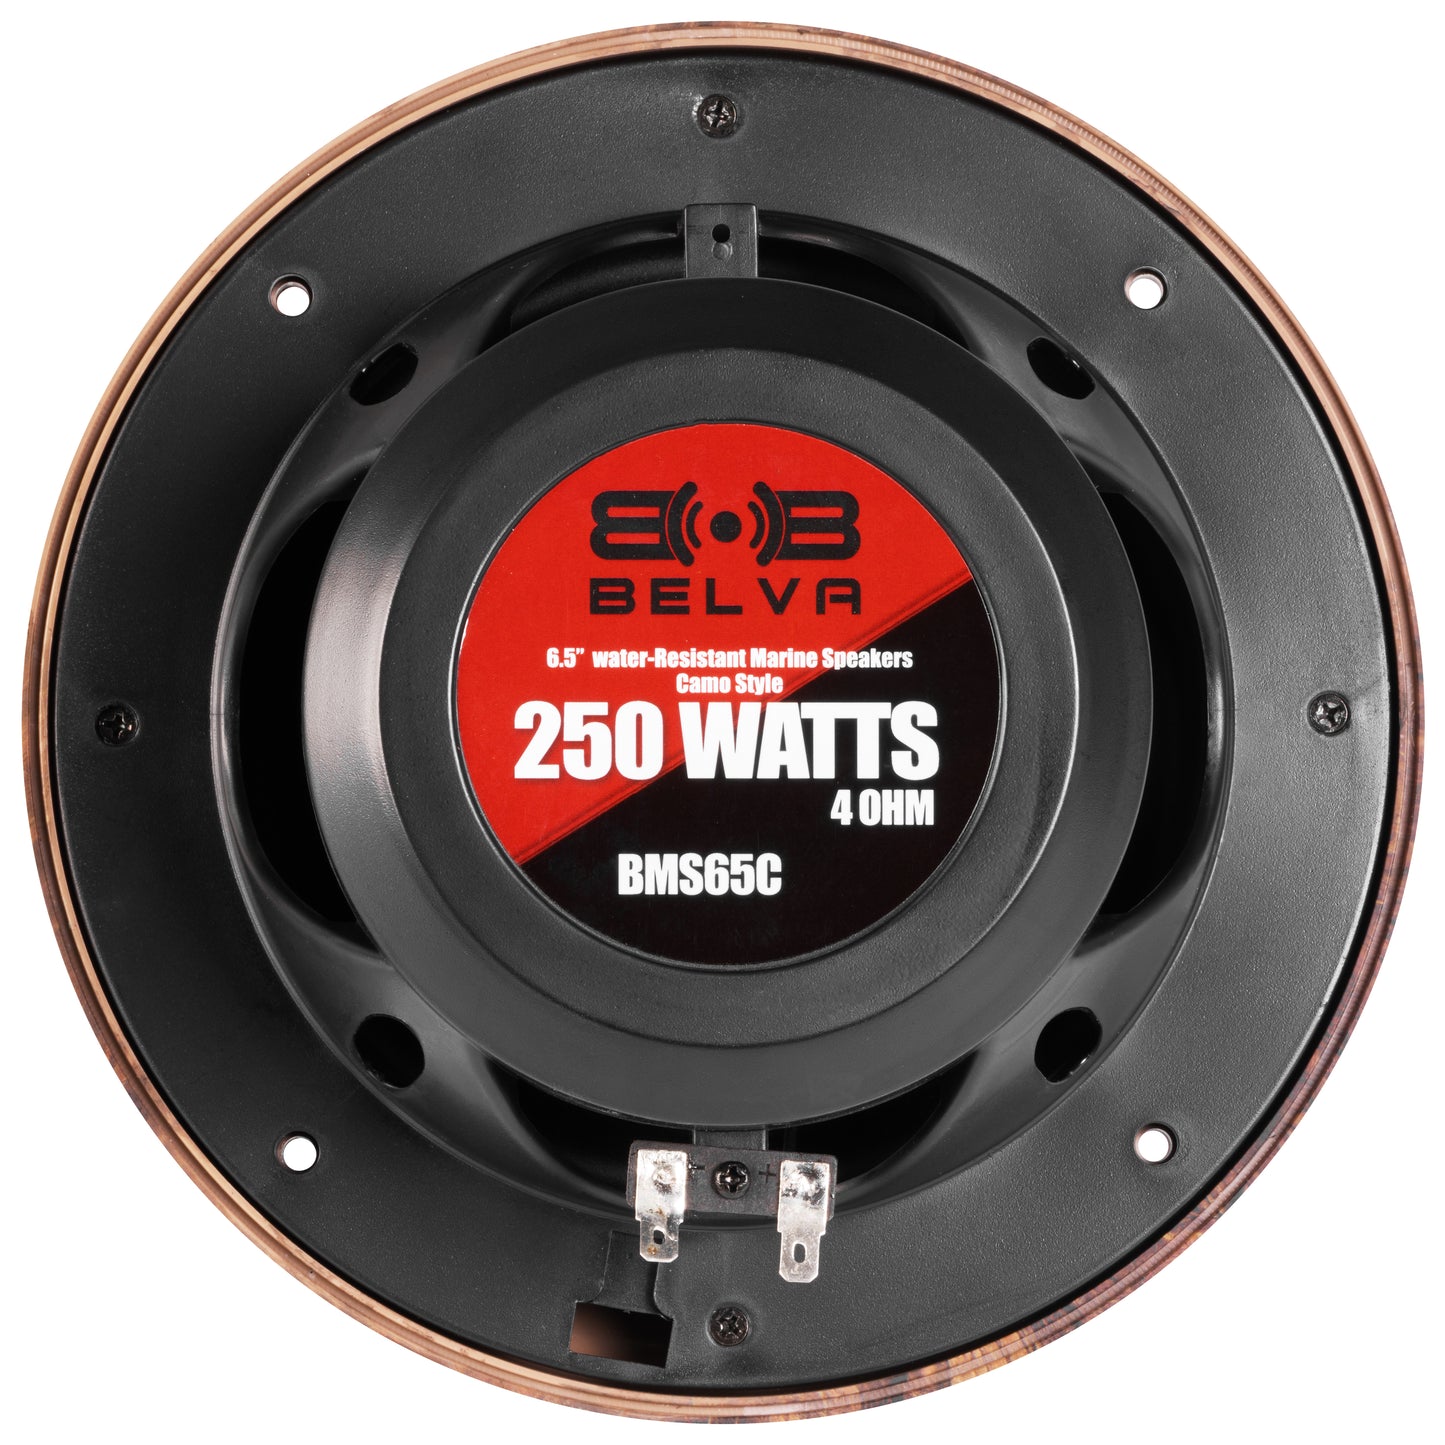 BMS65C 500W Peak (250W RMS) 6.5" 2-Way Coaxial Marine Speakers (Outdoor Camo)